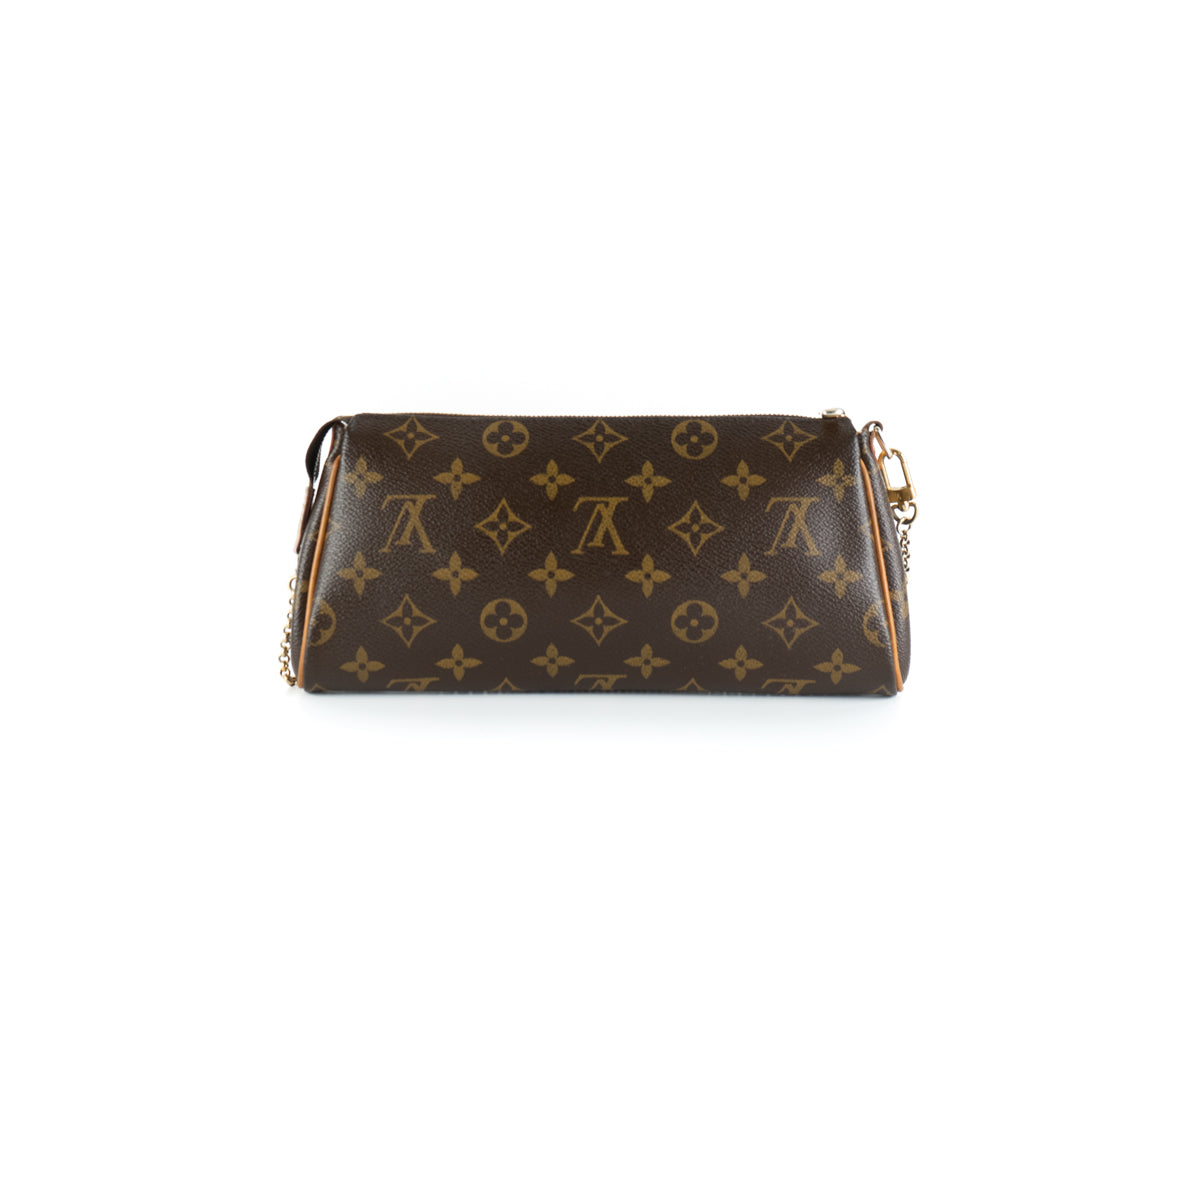 Louis Vuitton Monogram Canvas Eva Bag #ad #louisvuitton #luxuryitems #rich # millionaire #womensfashion #ba…